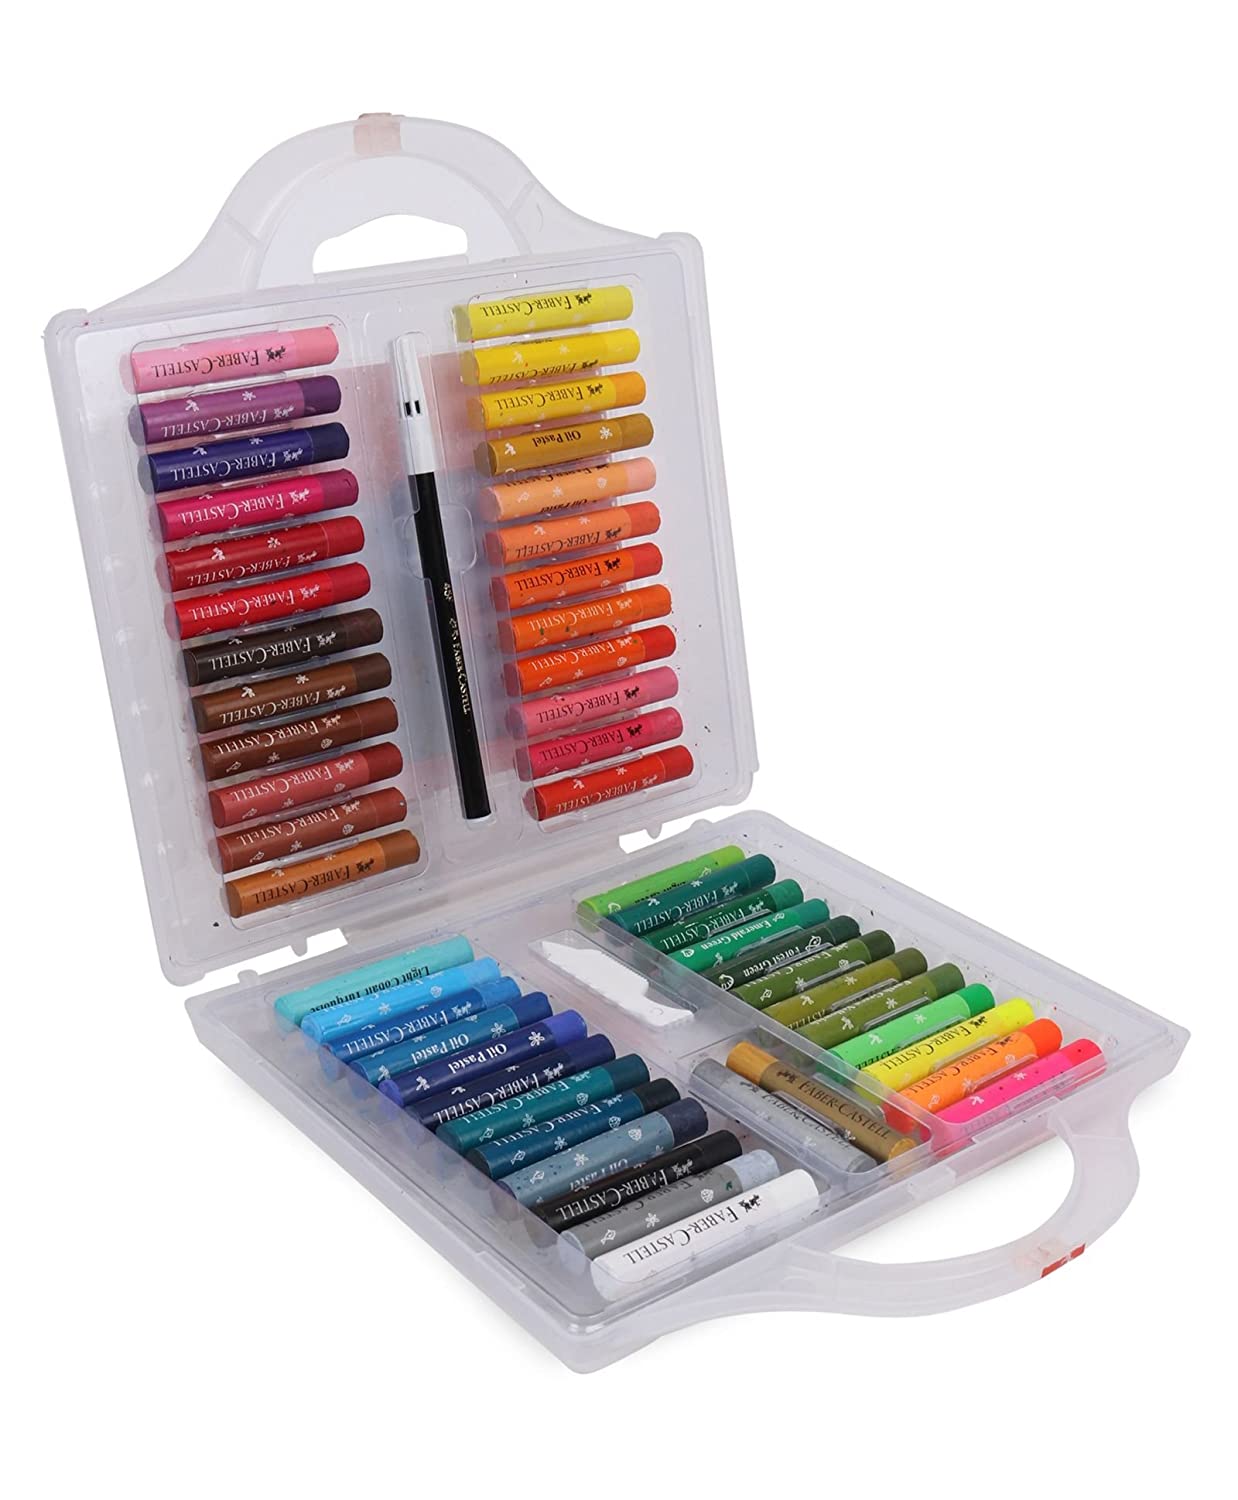 Camlin Kokuyo Oil Pastel Crayons Color 25 Shades Assorted Colours Plastic Box